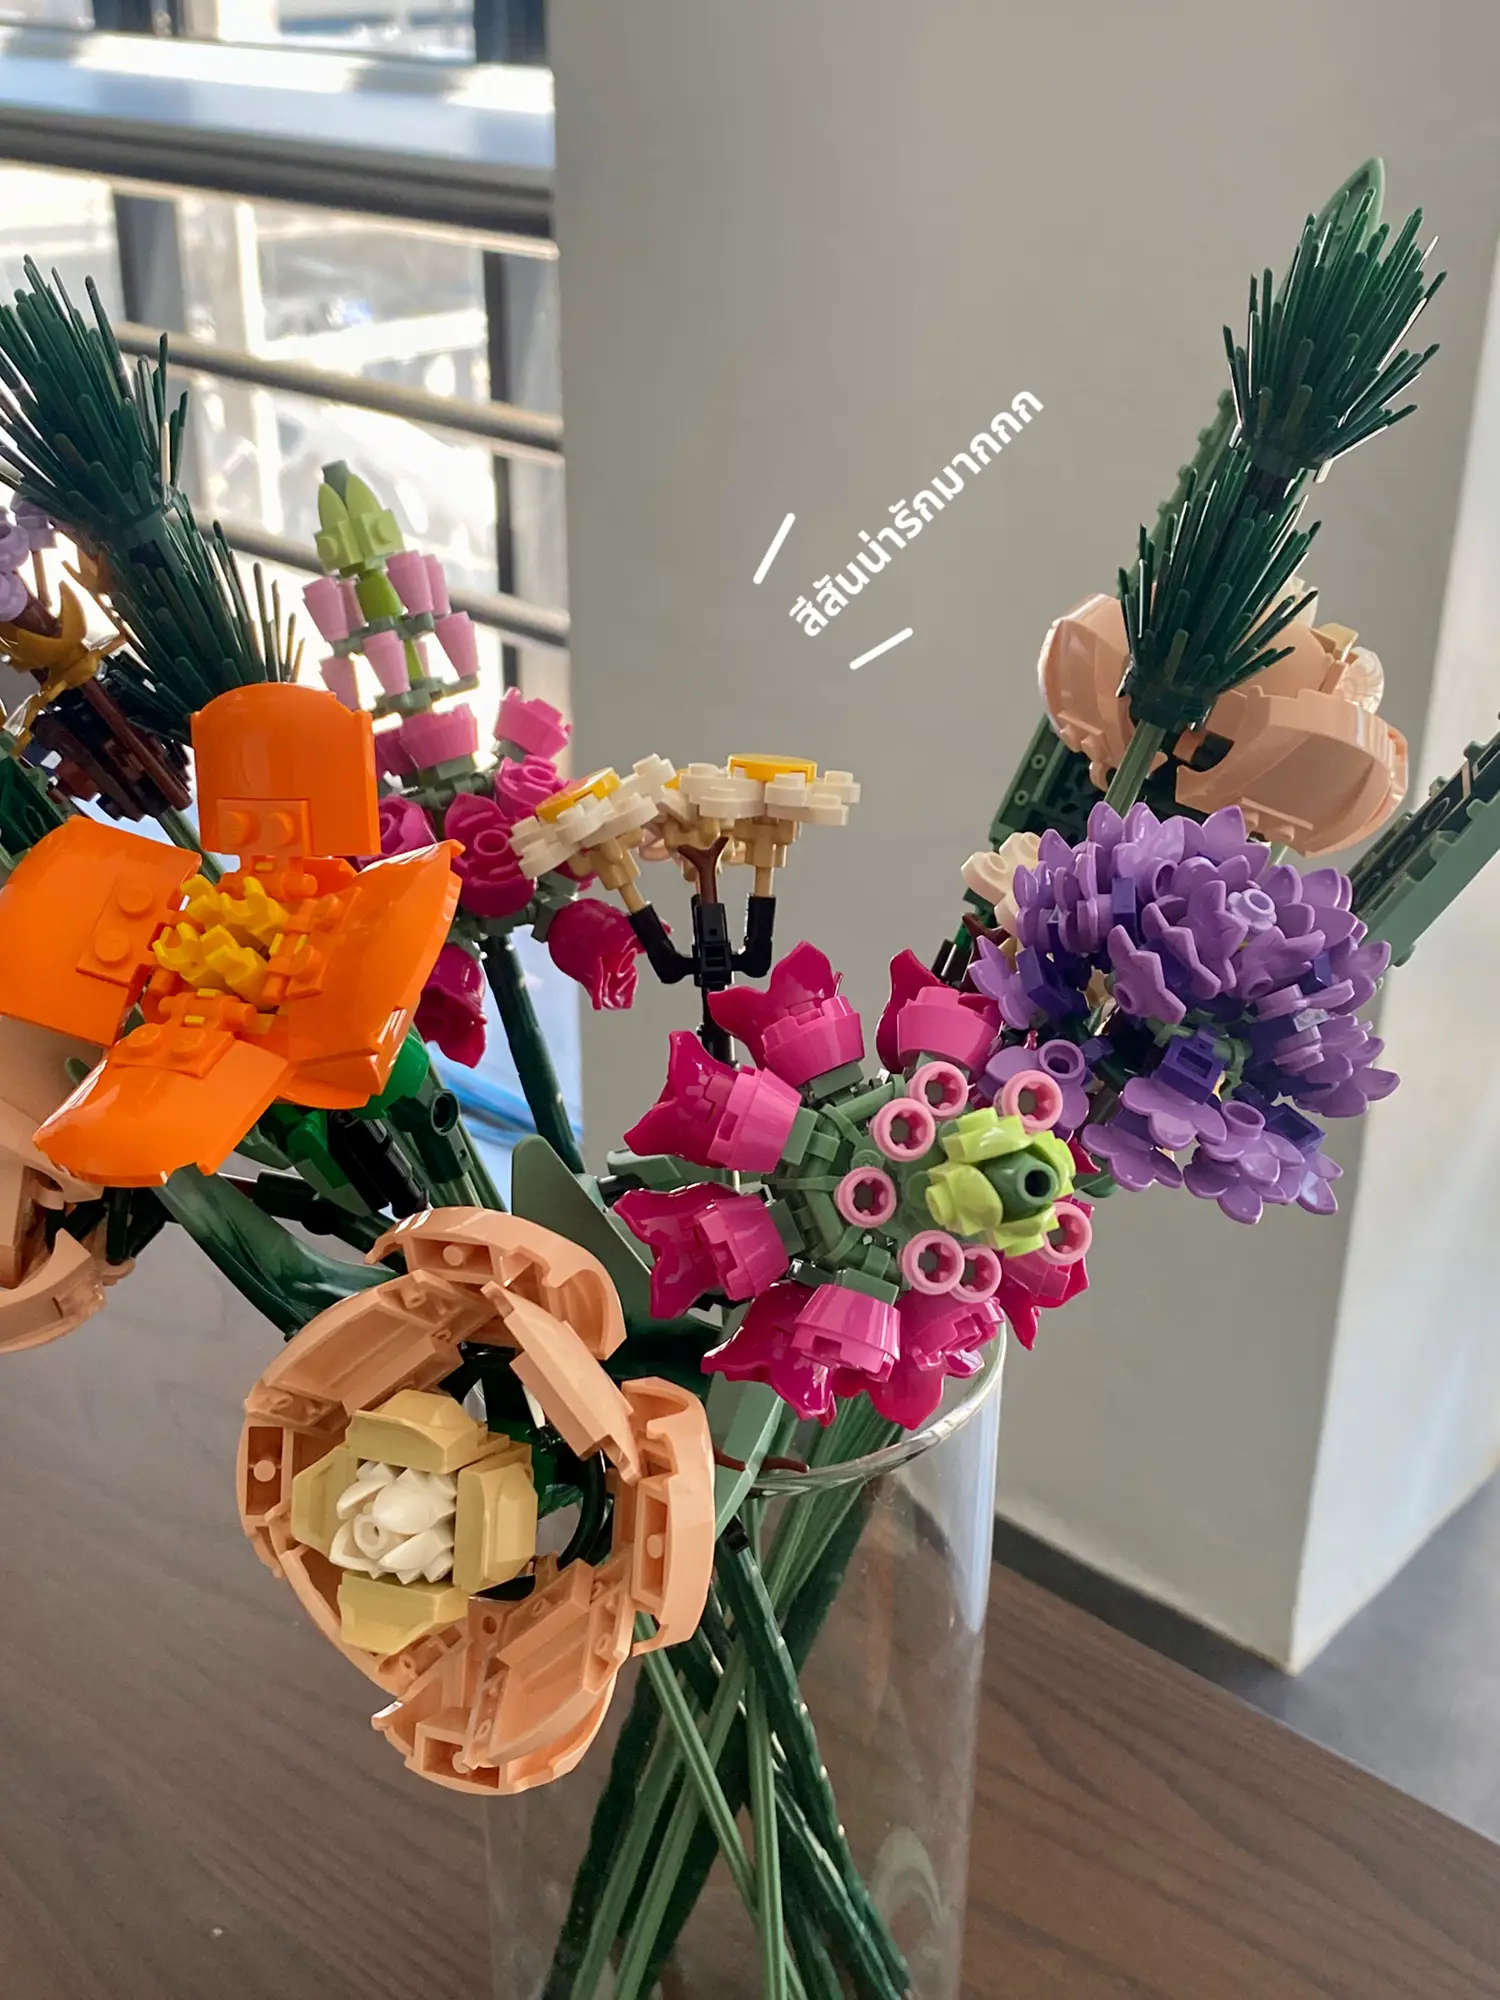 Lego Flower Bouquet review